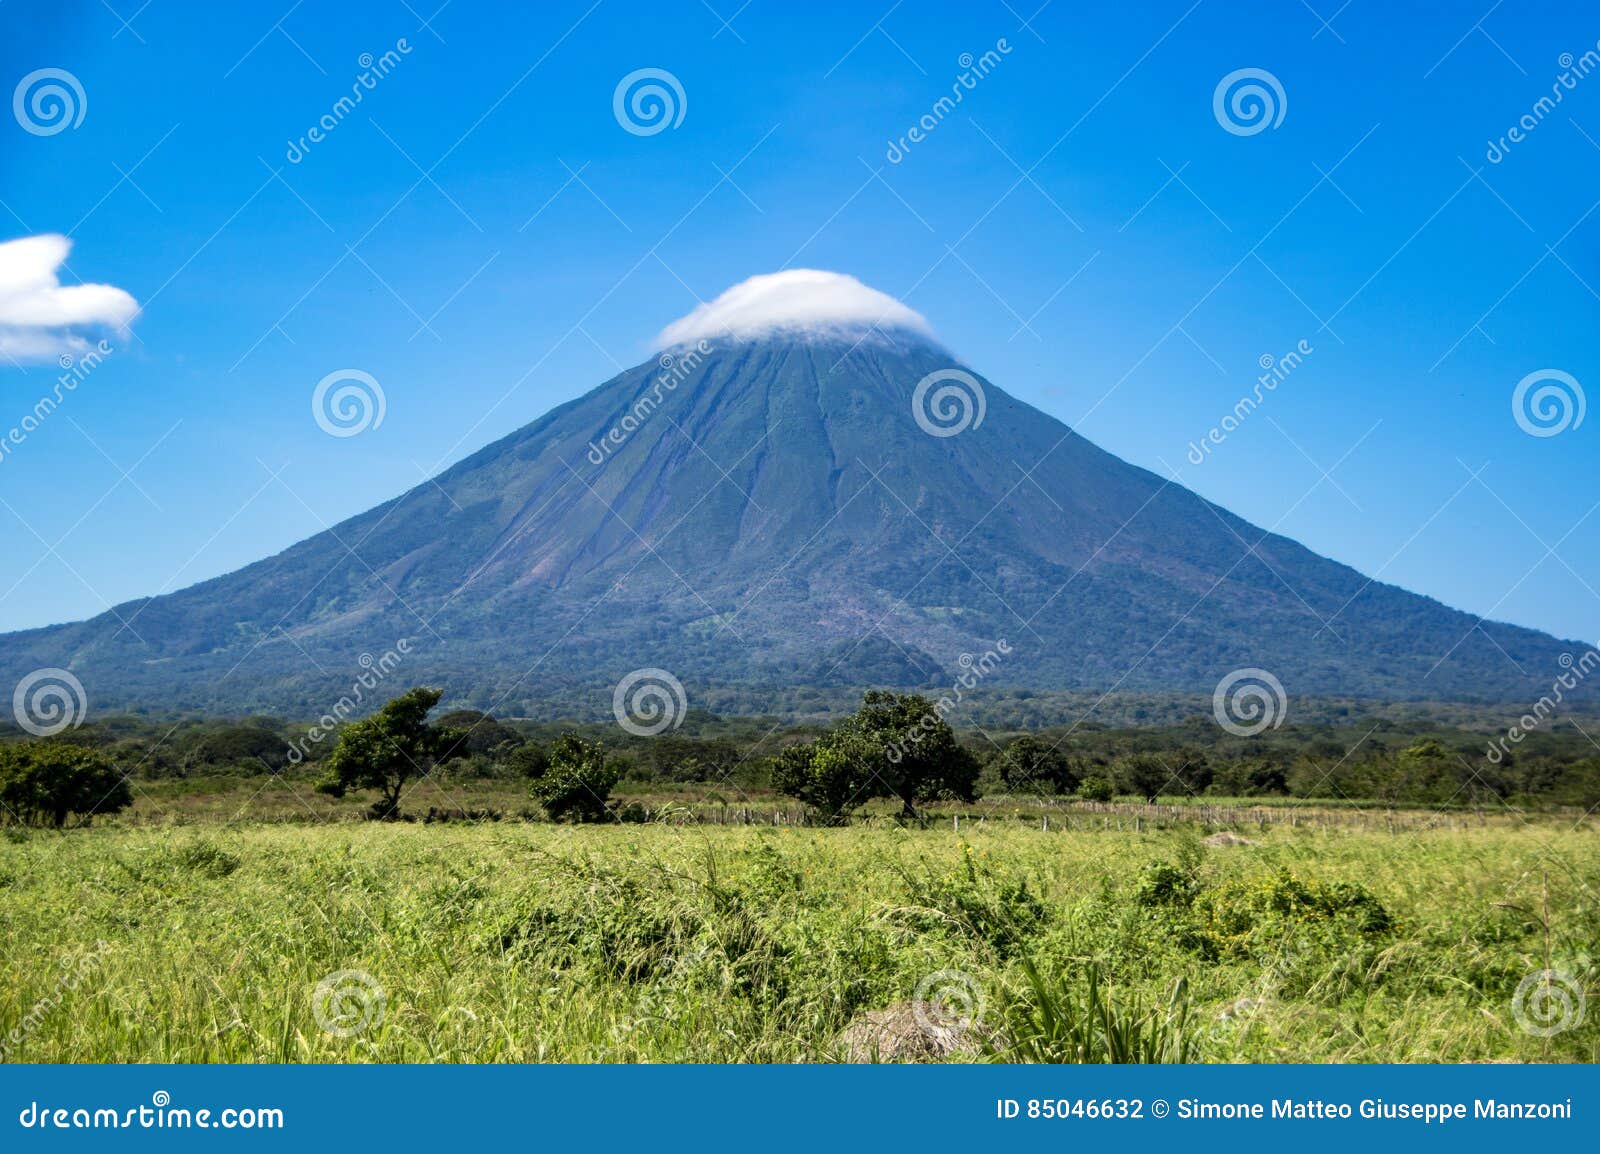 volcano concepcion on ometepe island in lake nicaragua